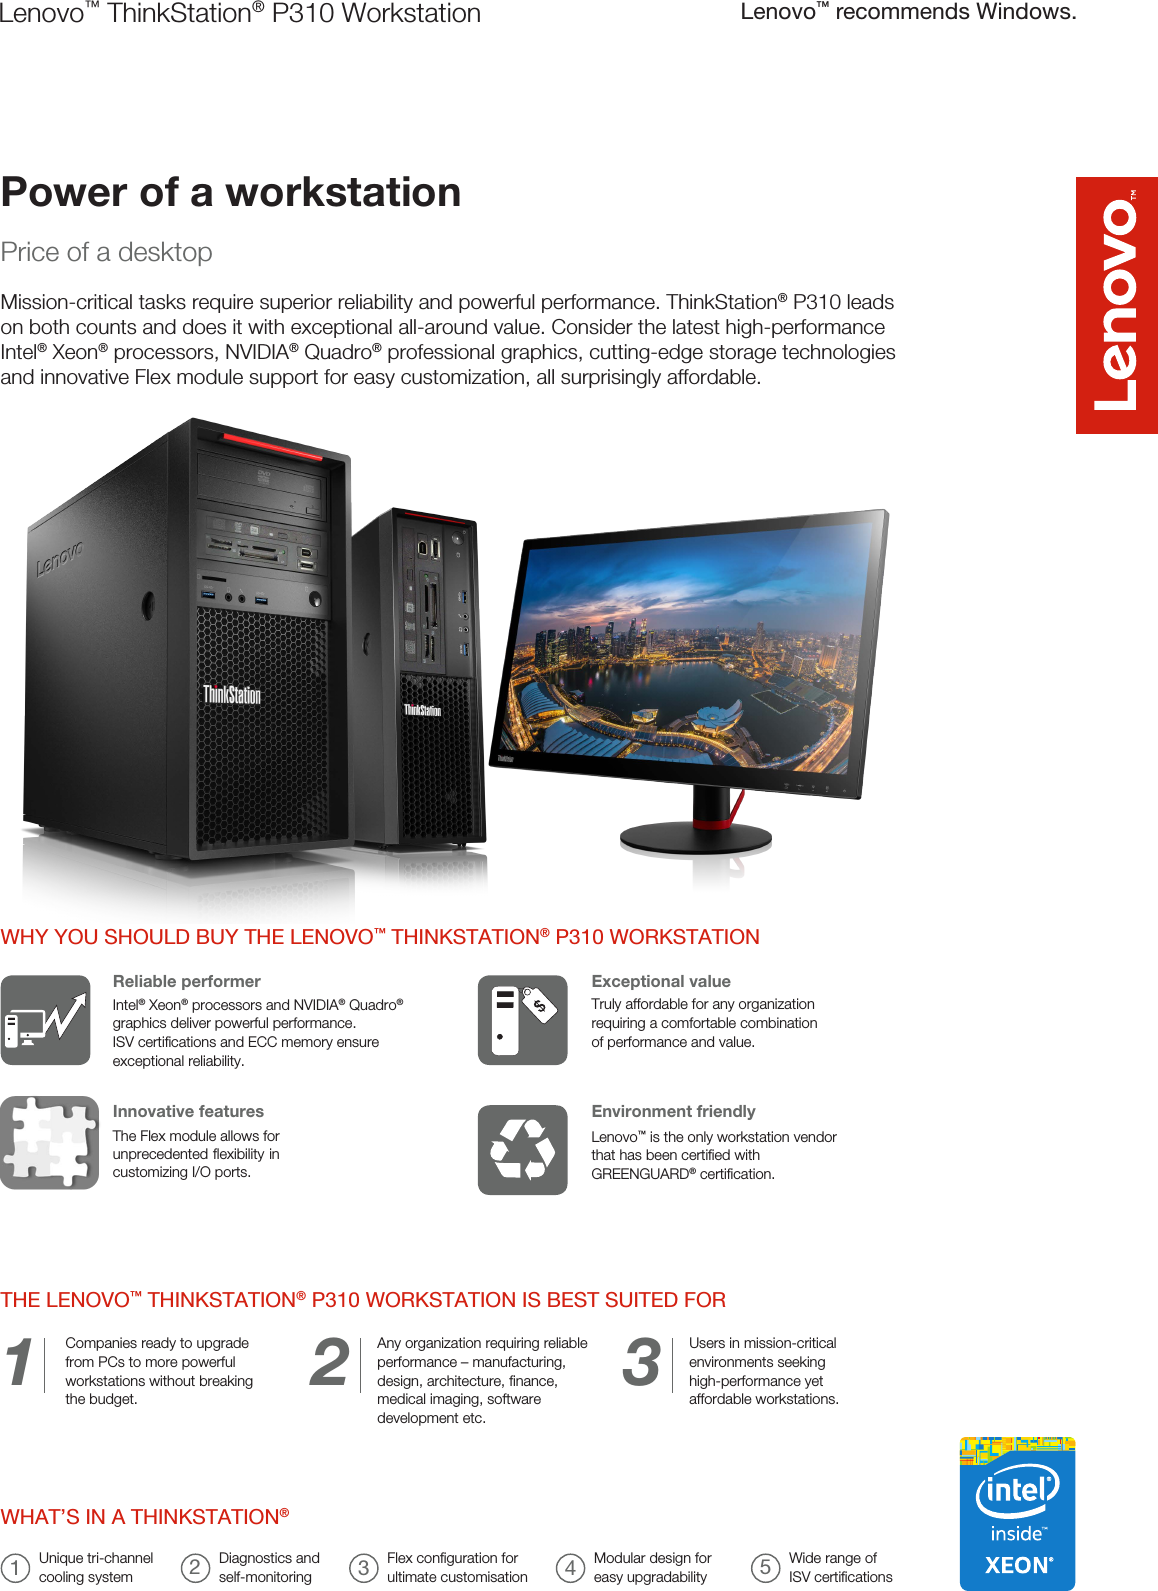 Page 1 of 2 - Lenovo P310 Datasheet 20151215 User Manual Workstation (Think Station)